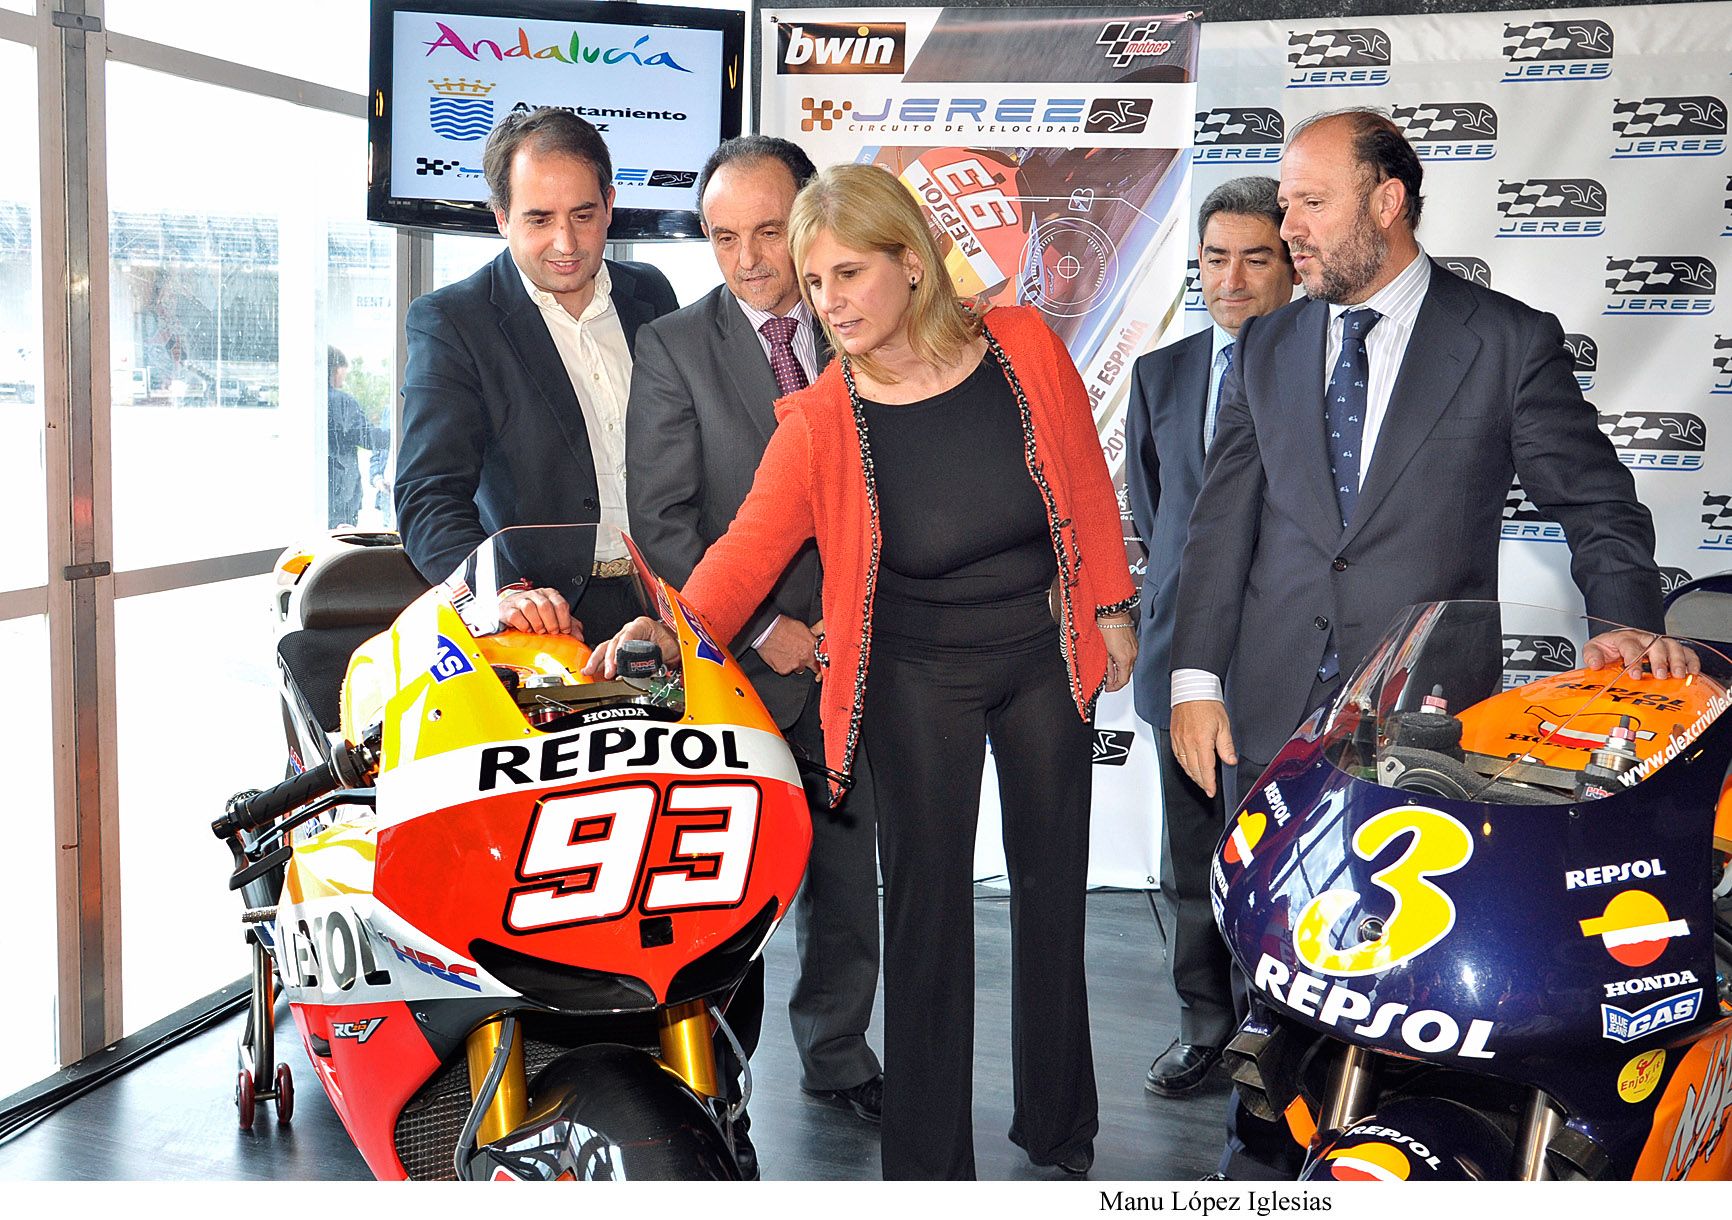 Alcaldesa-pres-XXVII-Gran-Premio-Motociclismo-_-01.jpg